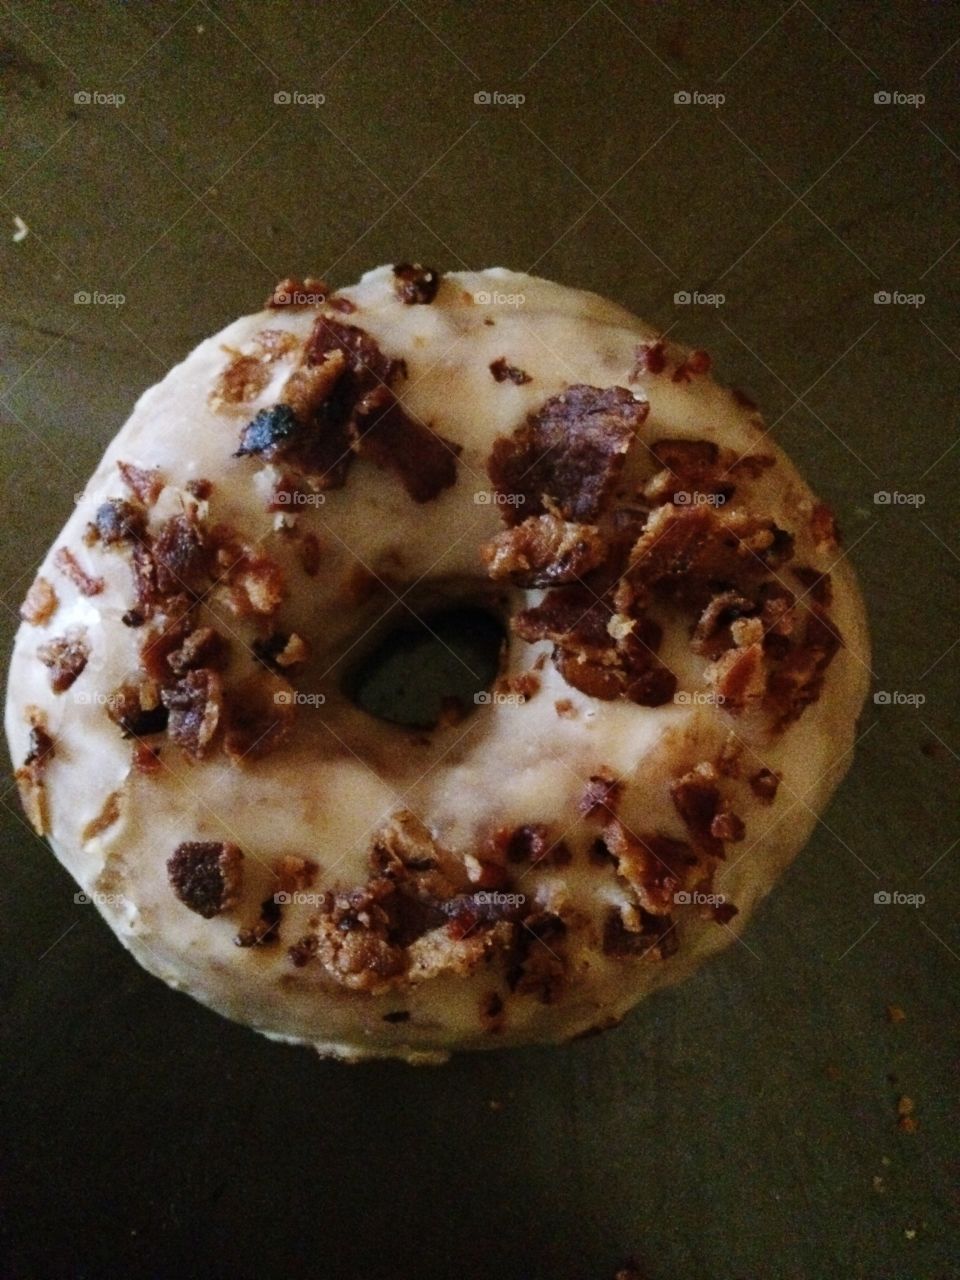 Maple bacon donut